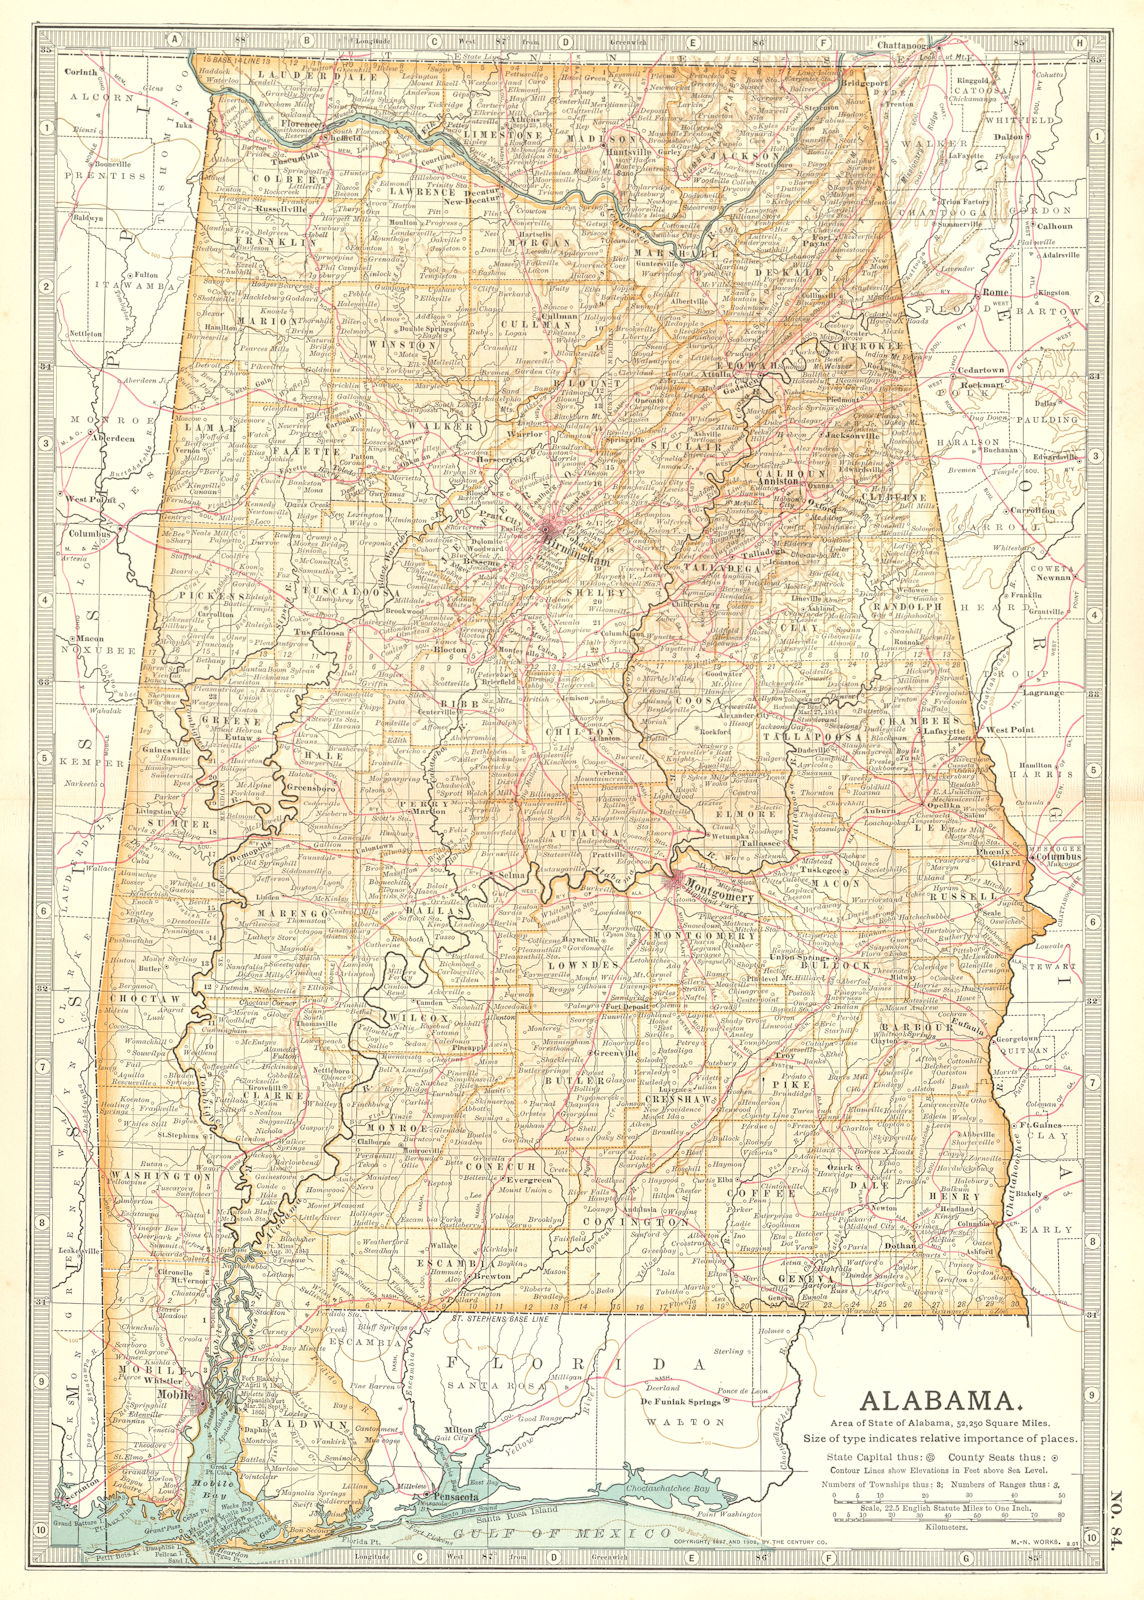 ALABAMA. State map. Counties. Shows civil war battlefields. Britannica 1903